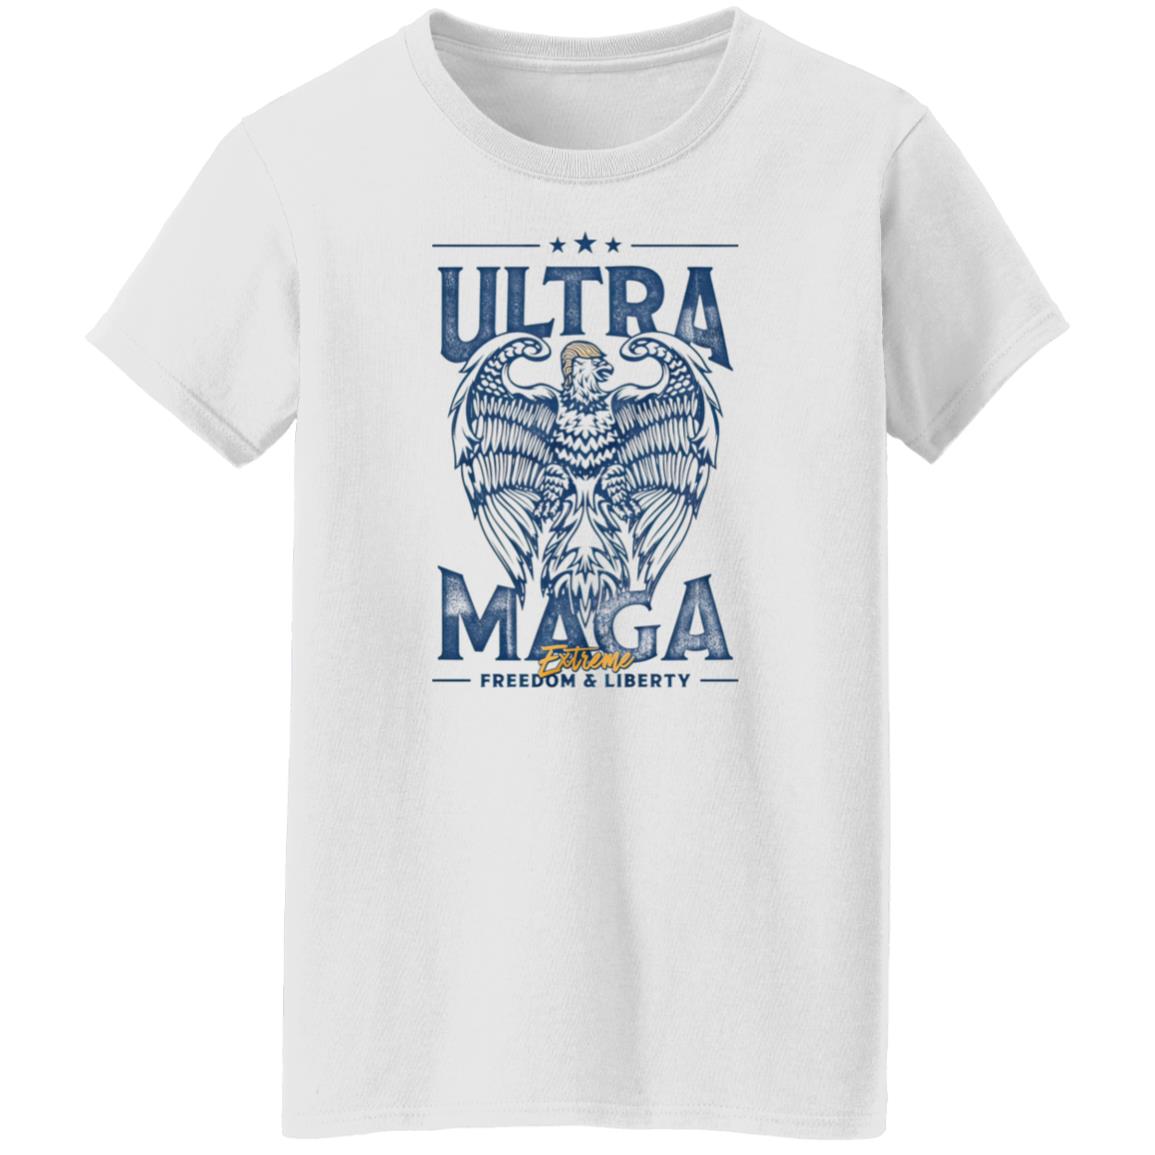 Ultra Maga Extreme Freedom And Liberty Shirt Blazemedia Merch The Blaze